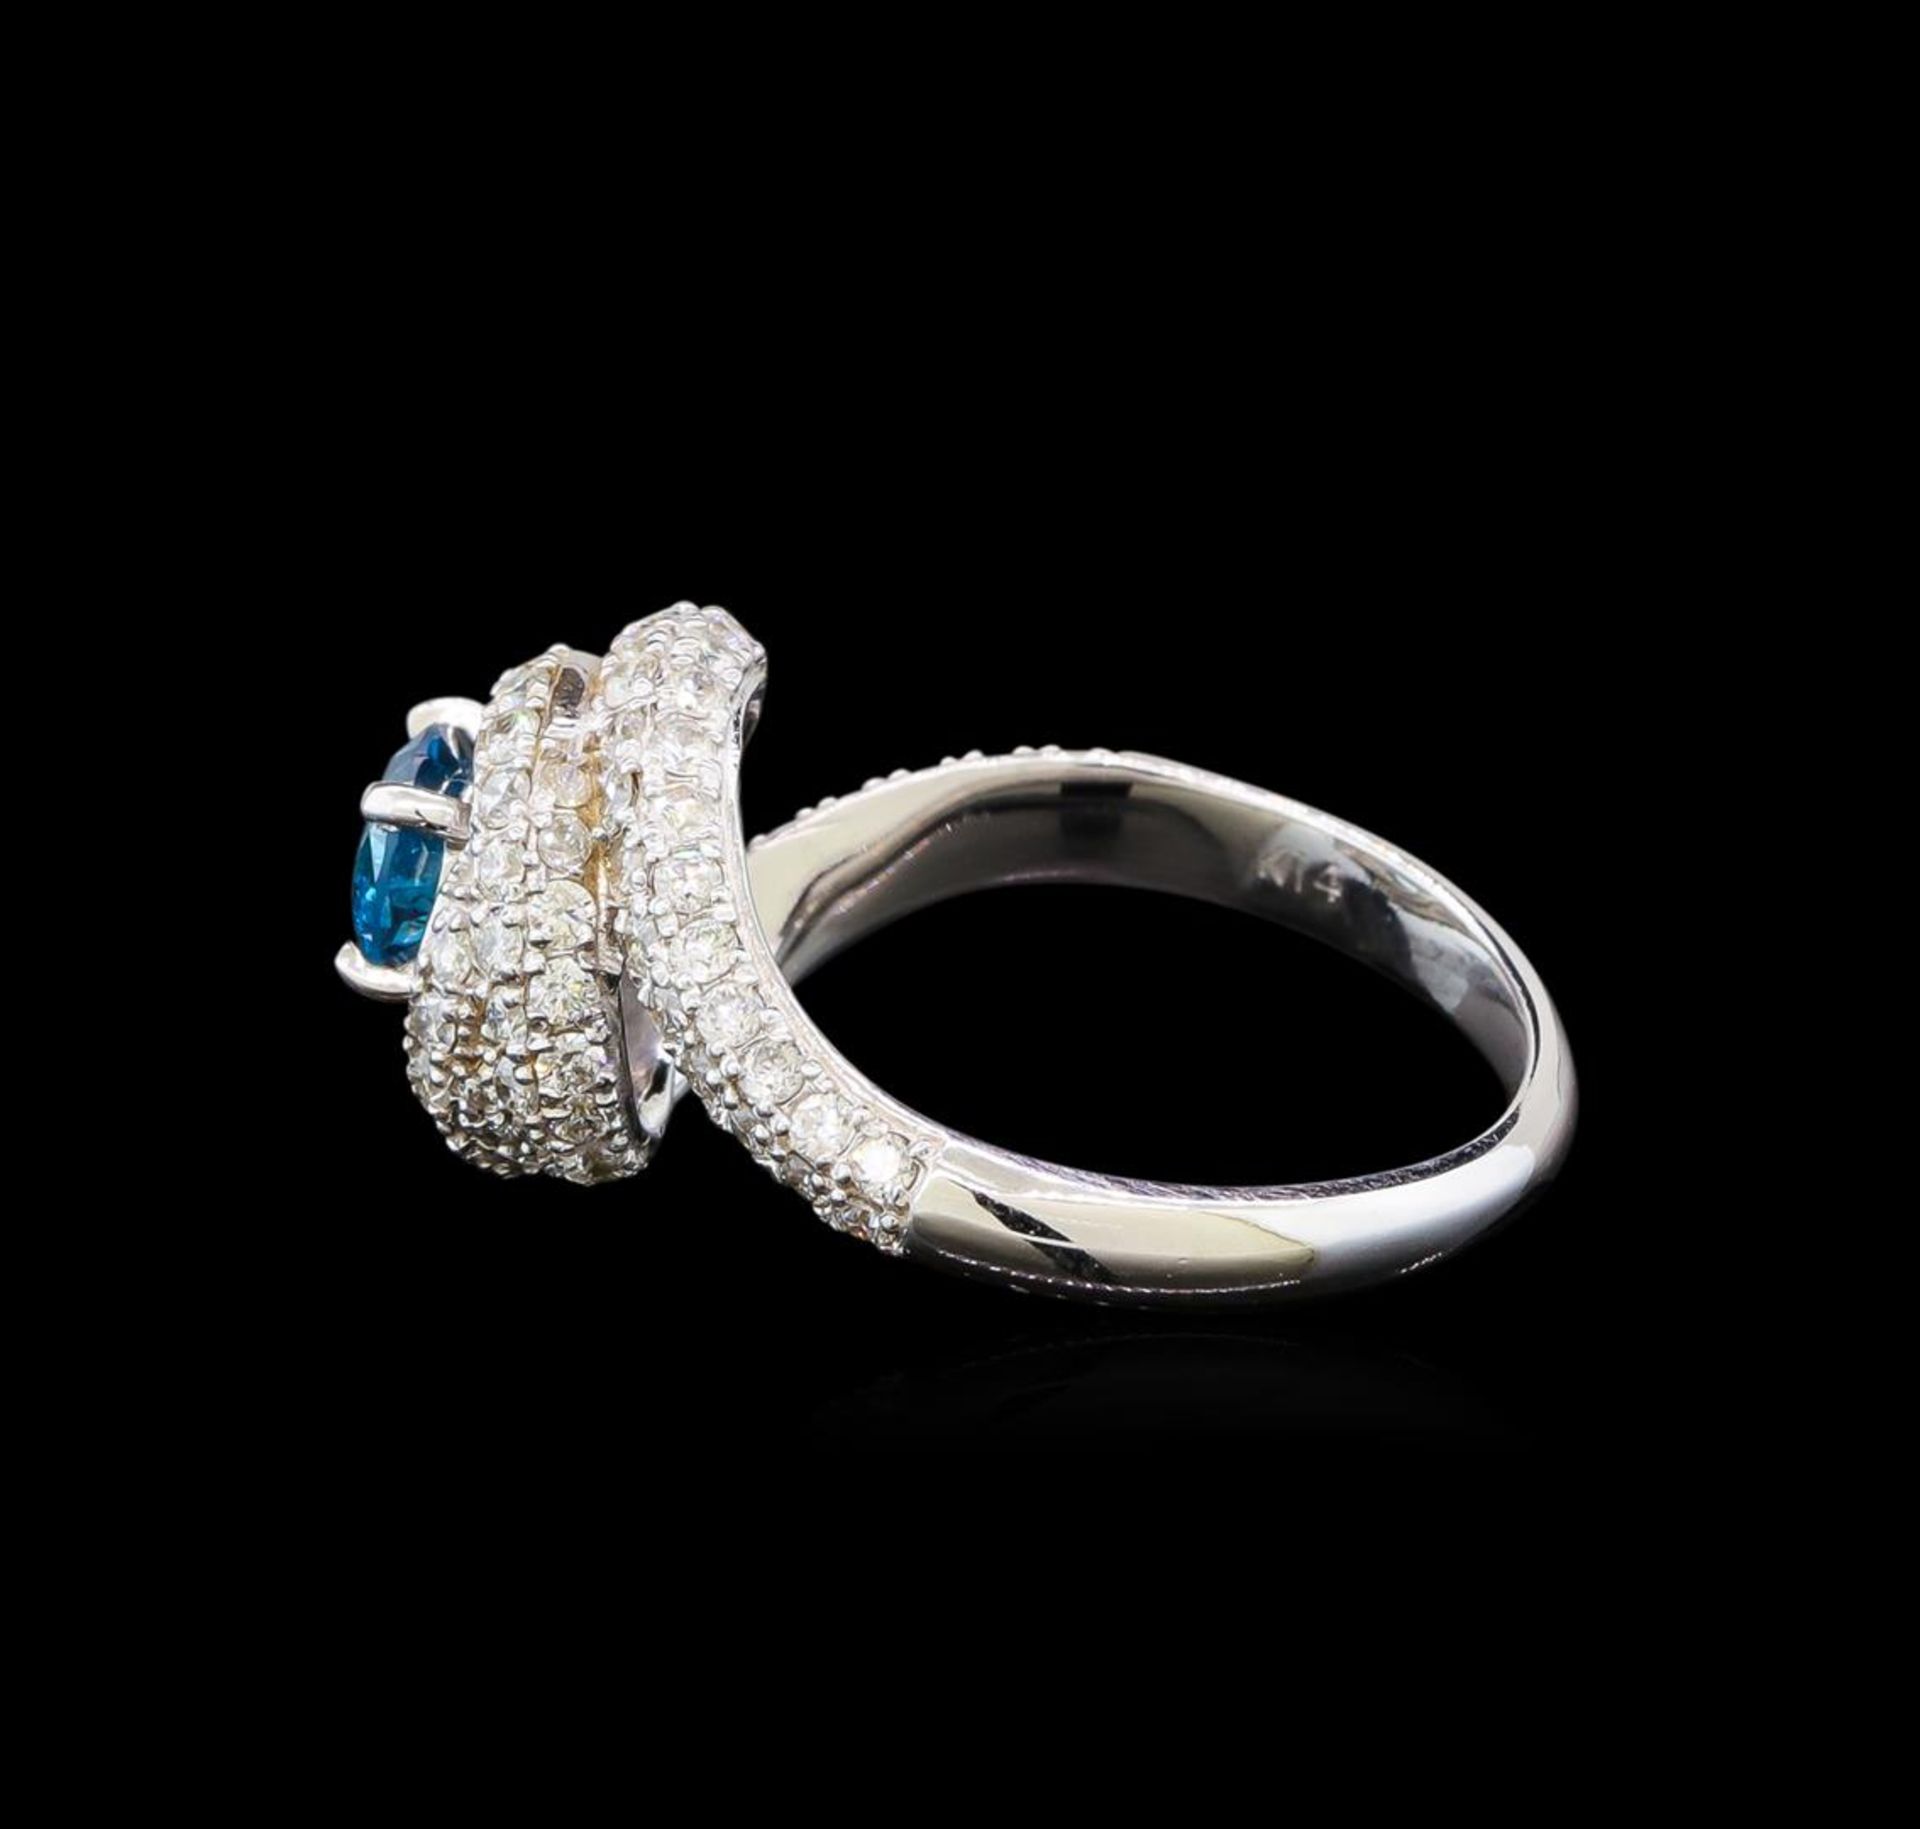 14KT White Gold 1.29 ctw Fancy Blue Diamond Ring - Image 3 of 5